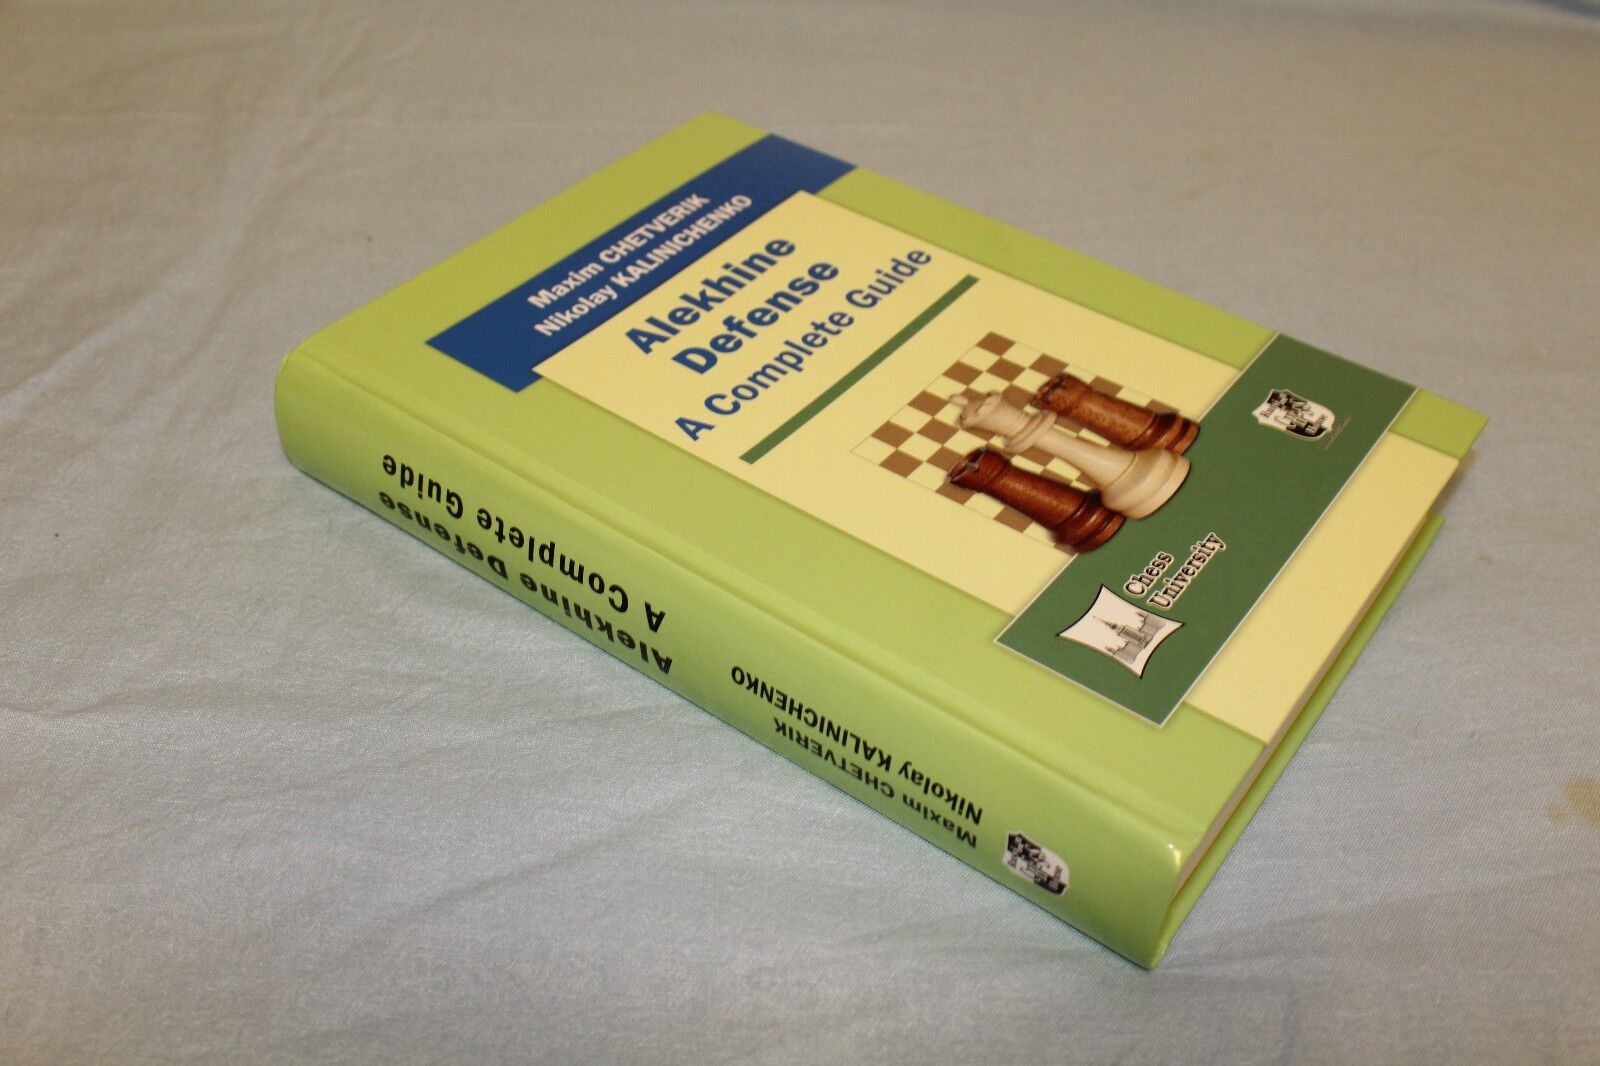 11047.Chess Book: Alekhine Defence. A complete Guide. N. Kalinichenko, M. Chetverik